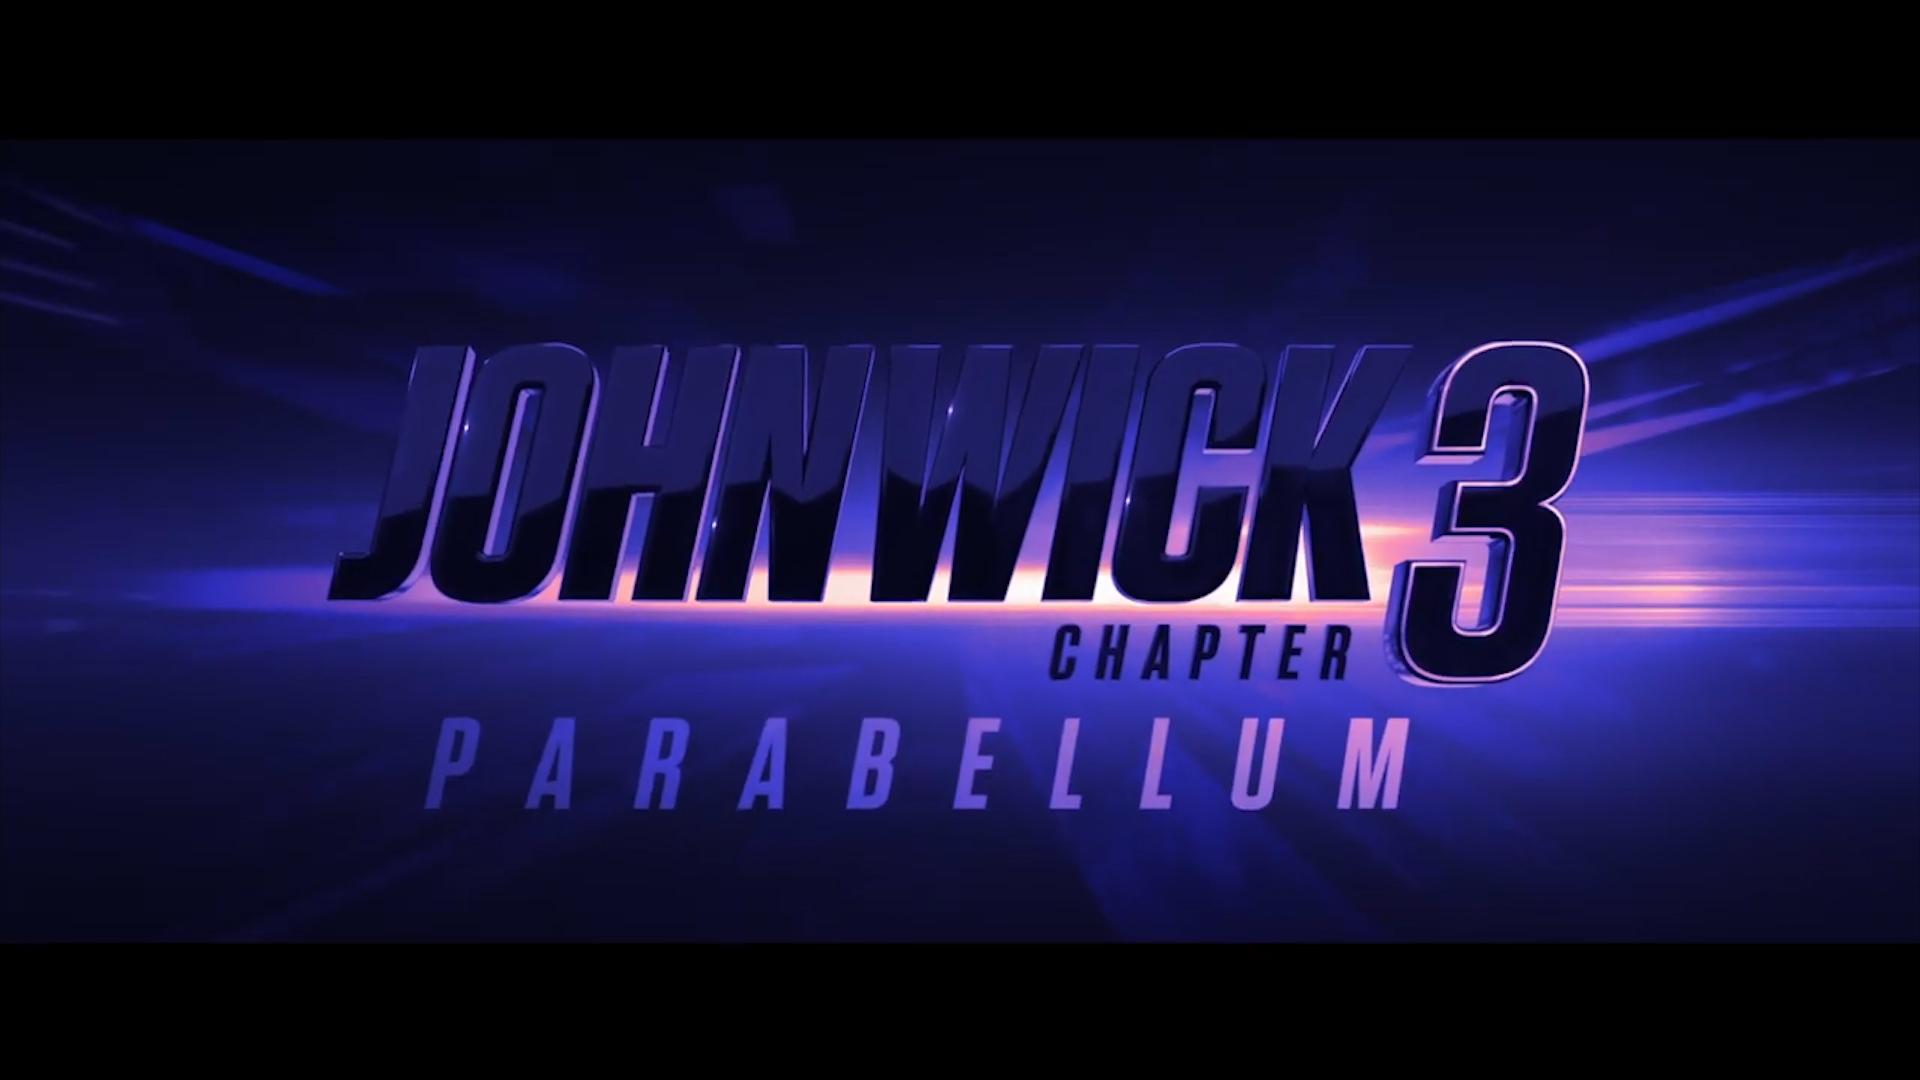 John Wick 3: Parabellum' Movie. Watch News Videos Online